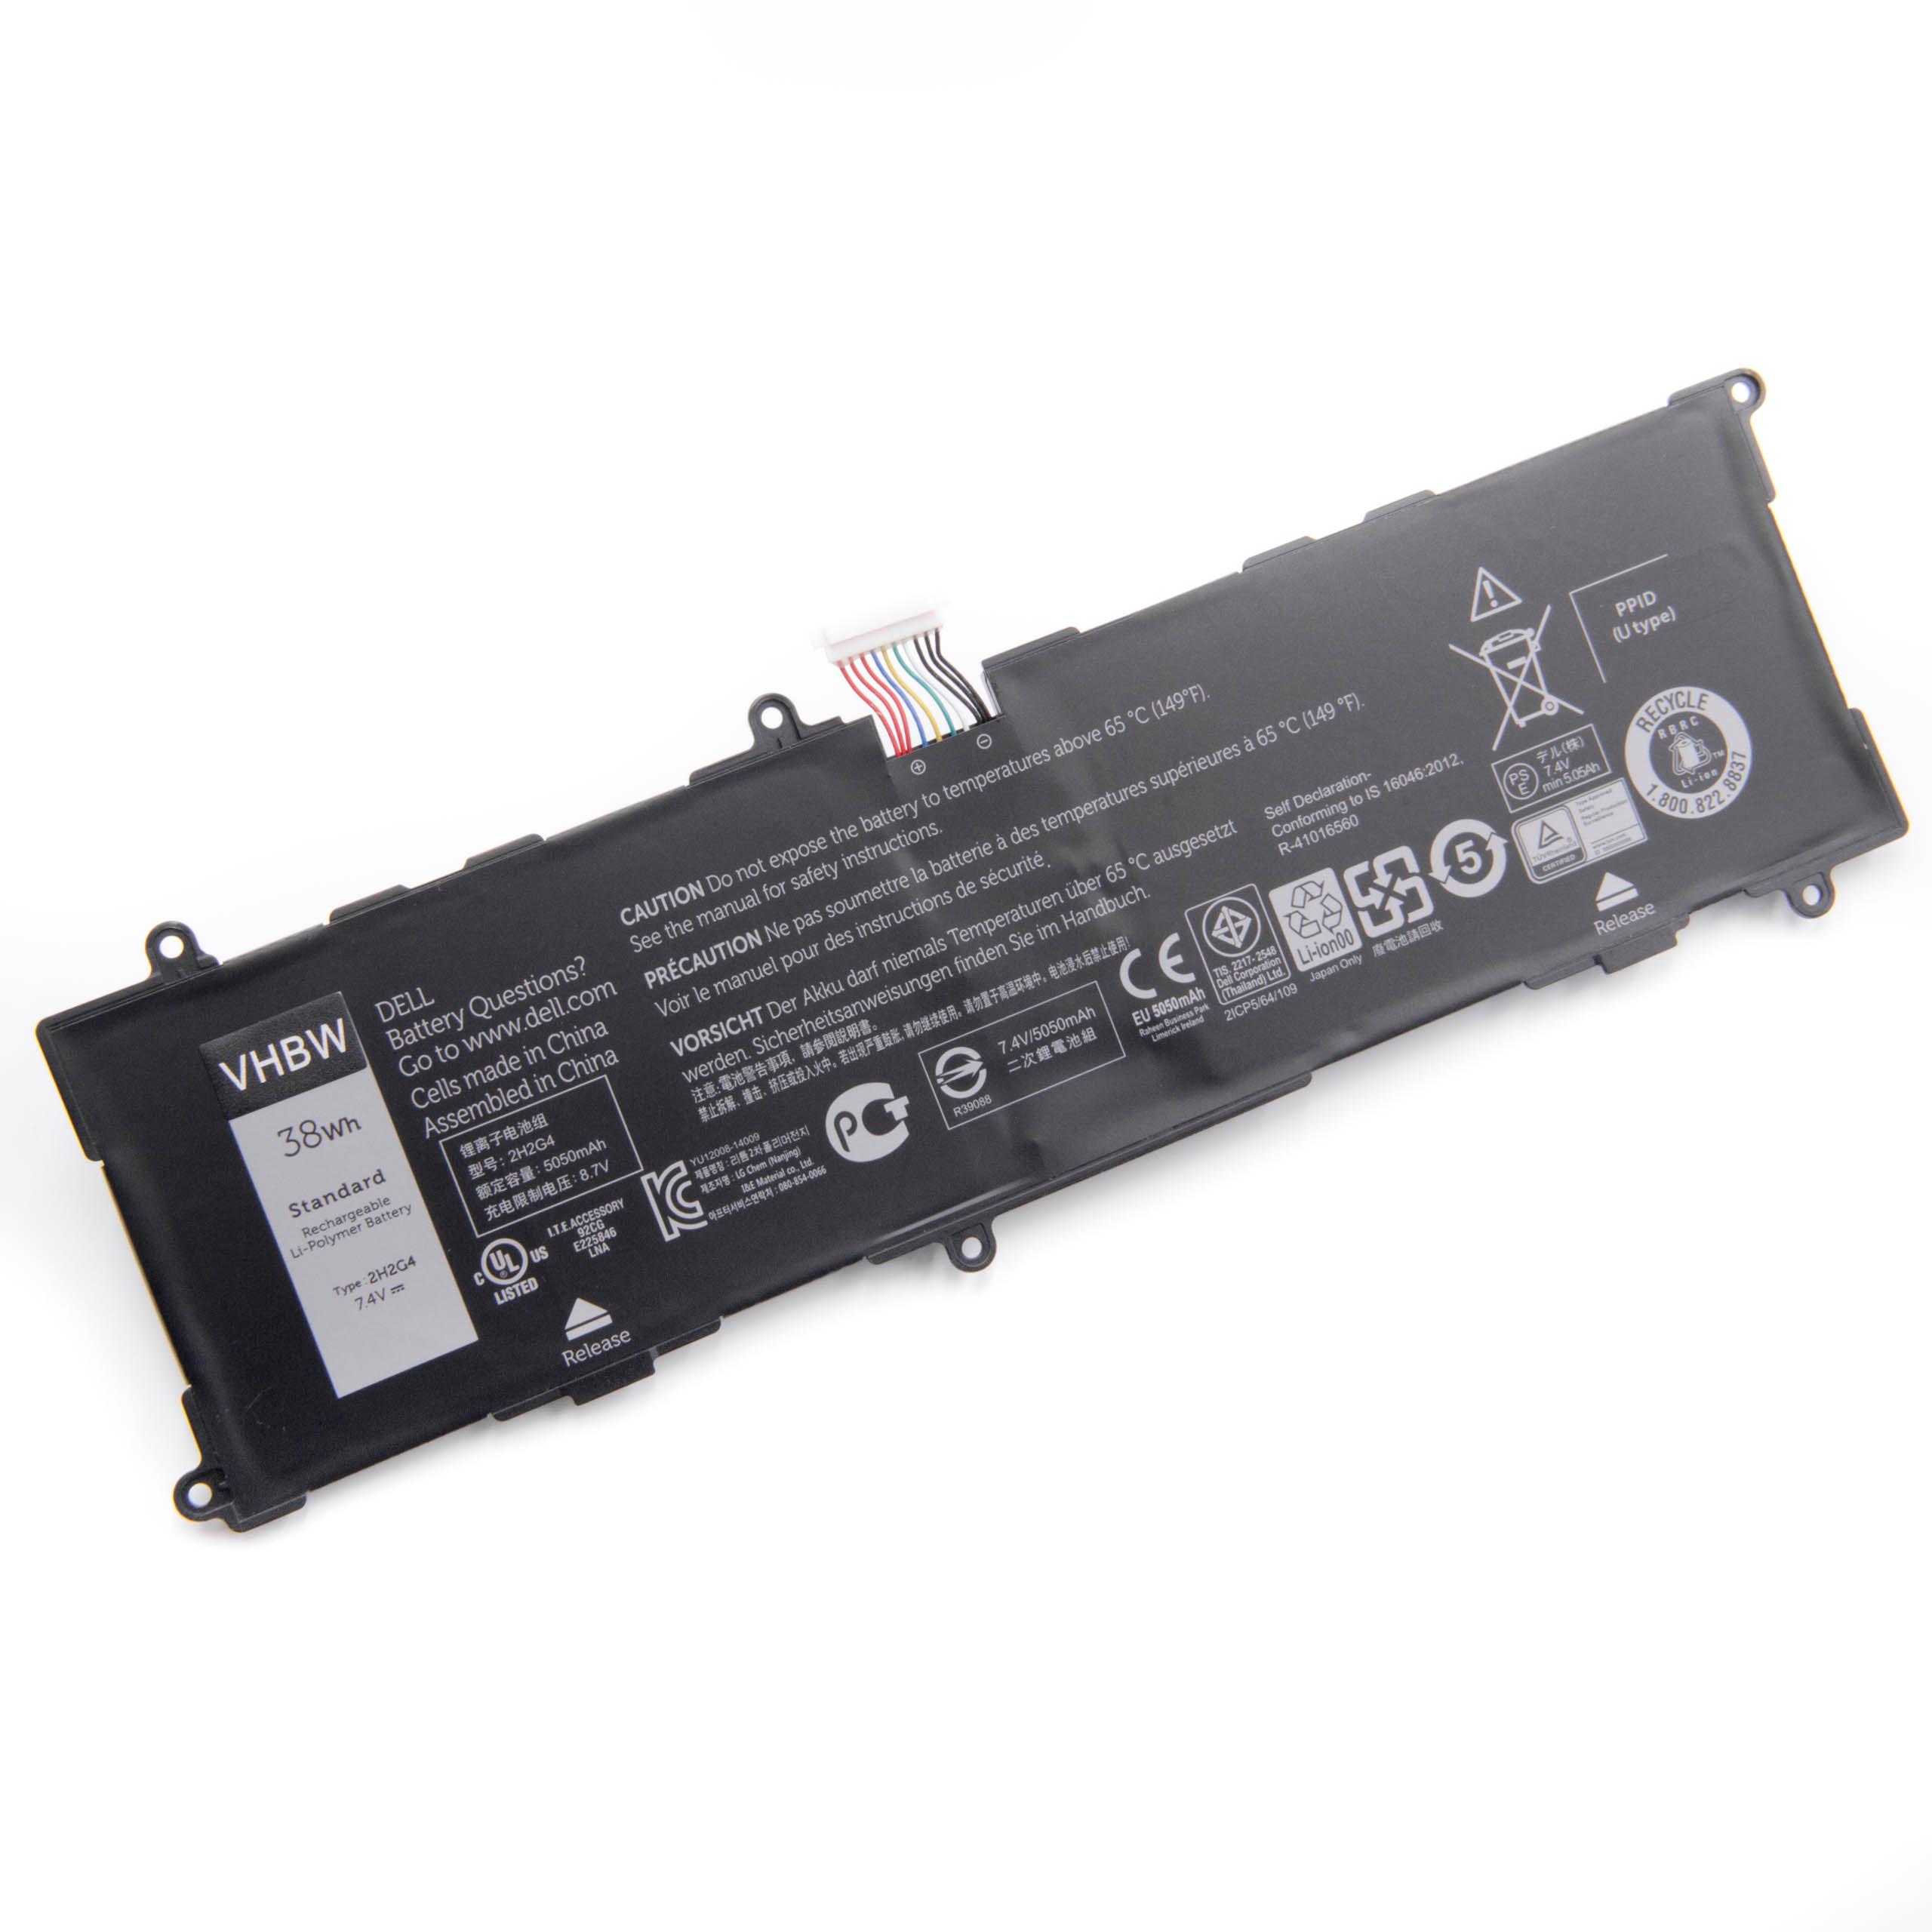 Tablet Battery Replacement for Dell TXJ69, 2H2G4 21CP5/63/105, HFRC3, 2H2G4 - 5100mAh 7.4V Li-polymer